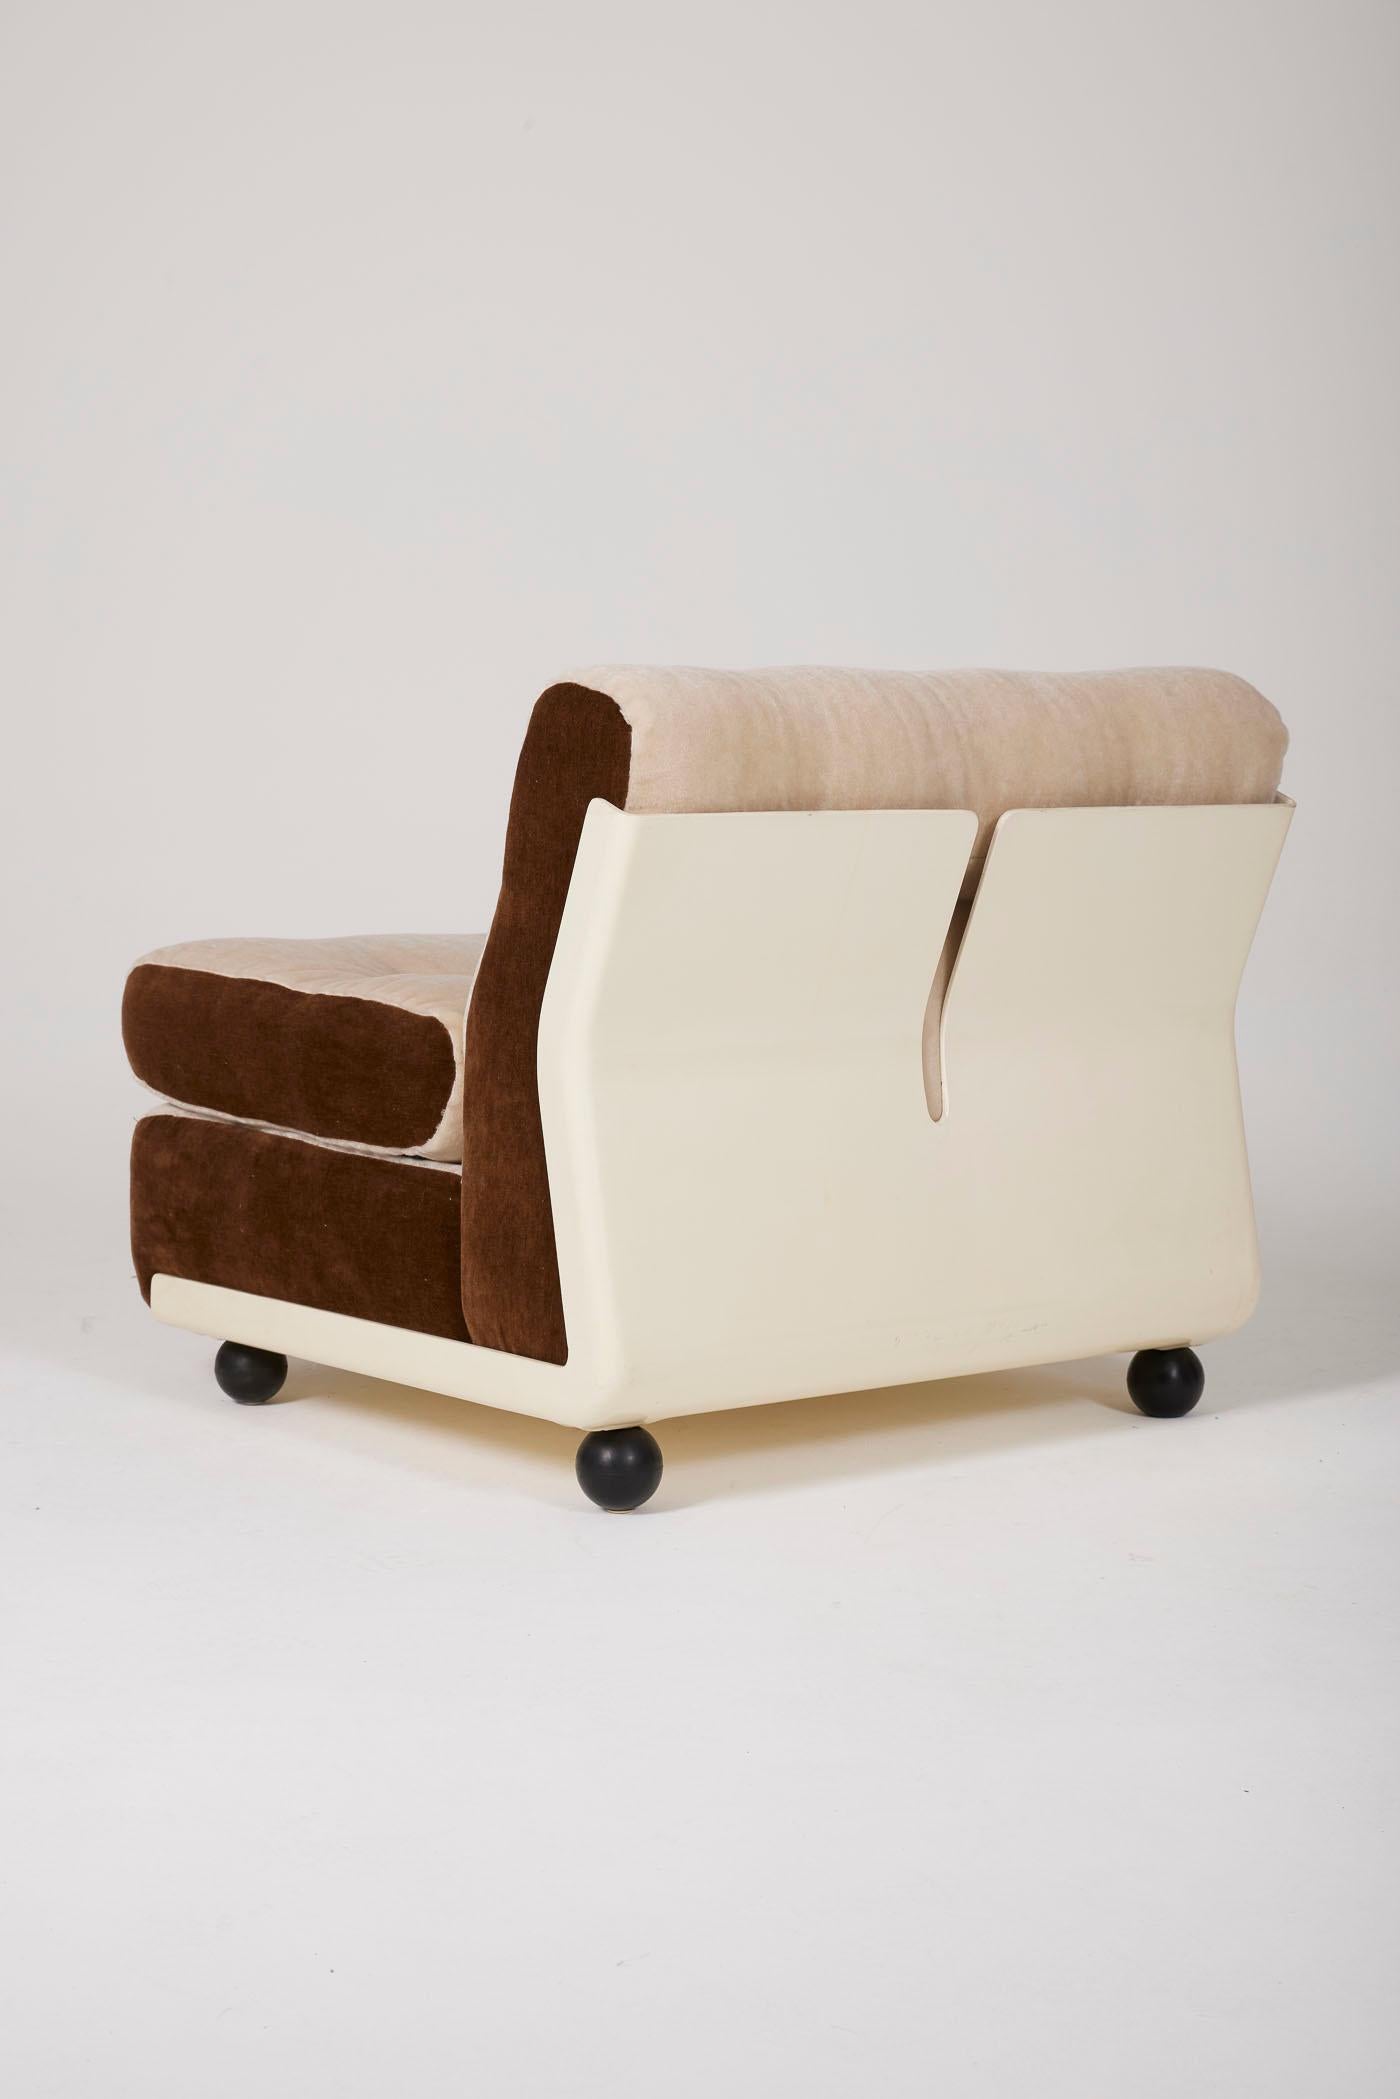 Mario Bellini armchair In Good Condition In PARIS, FR